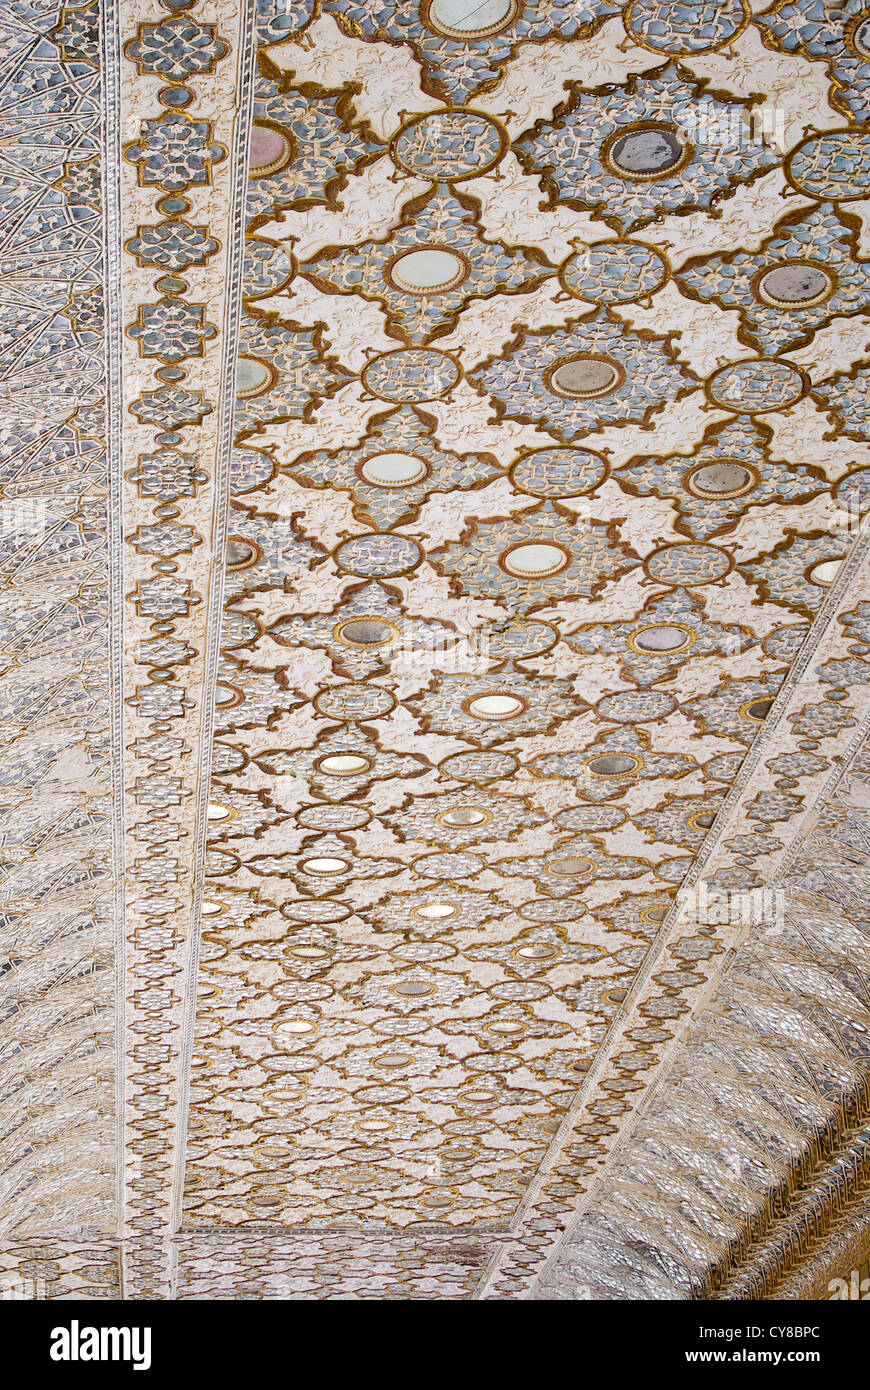 Mirrored ceiling of Jai Mandir (Hall of Victory) at at Amer / Amber Fort near Jaipur, Rajasthan, India Stock Photo